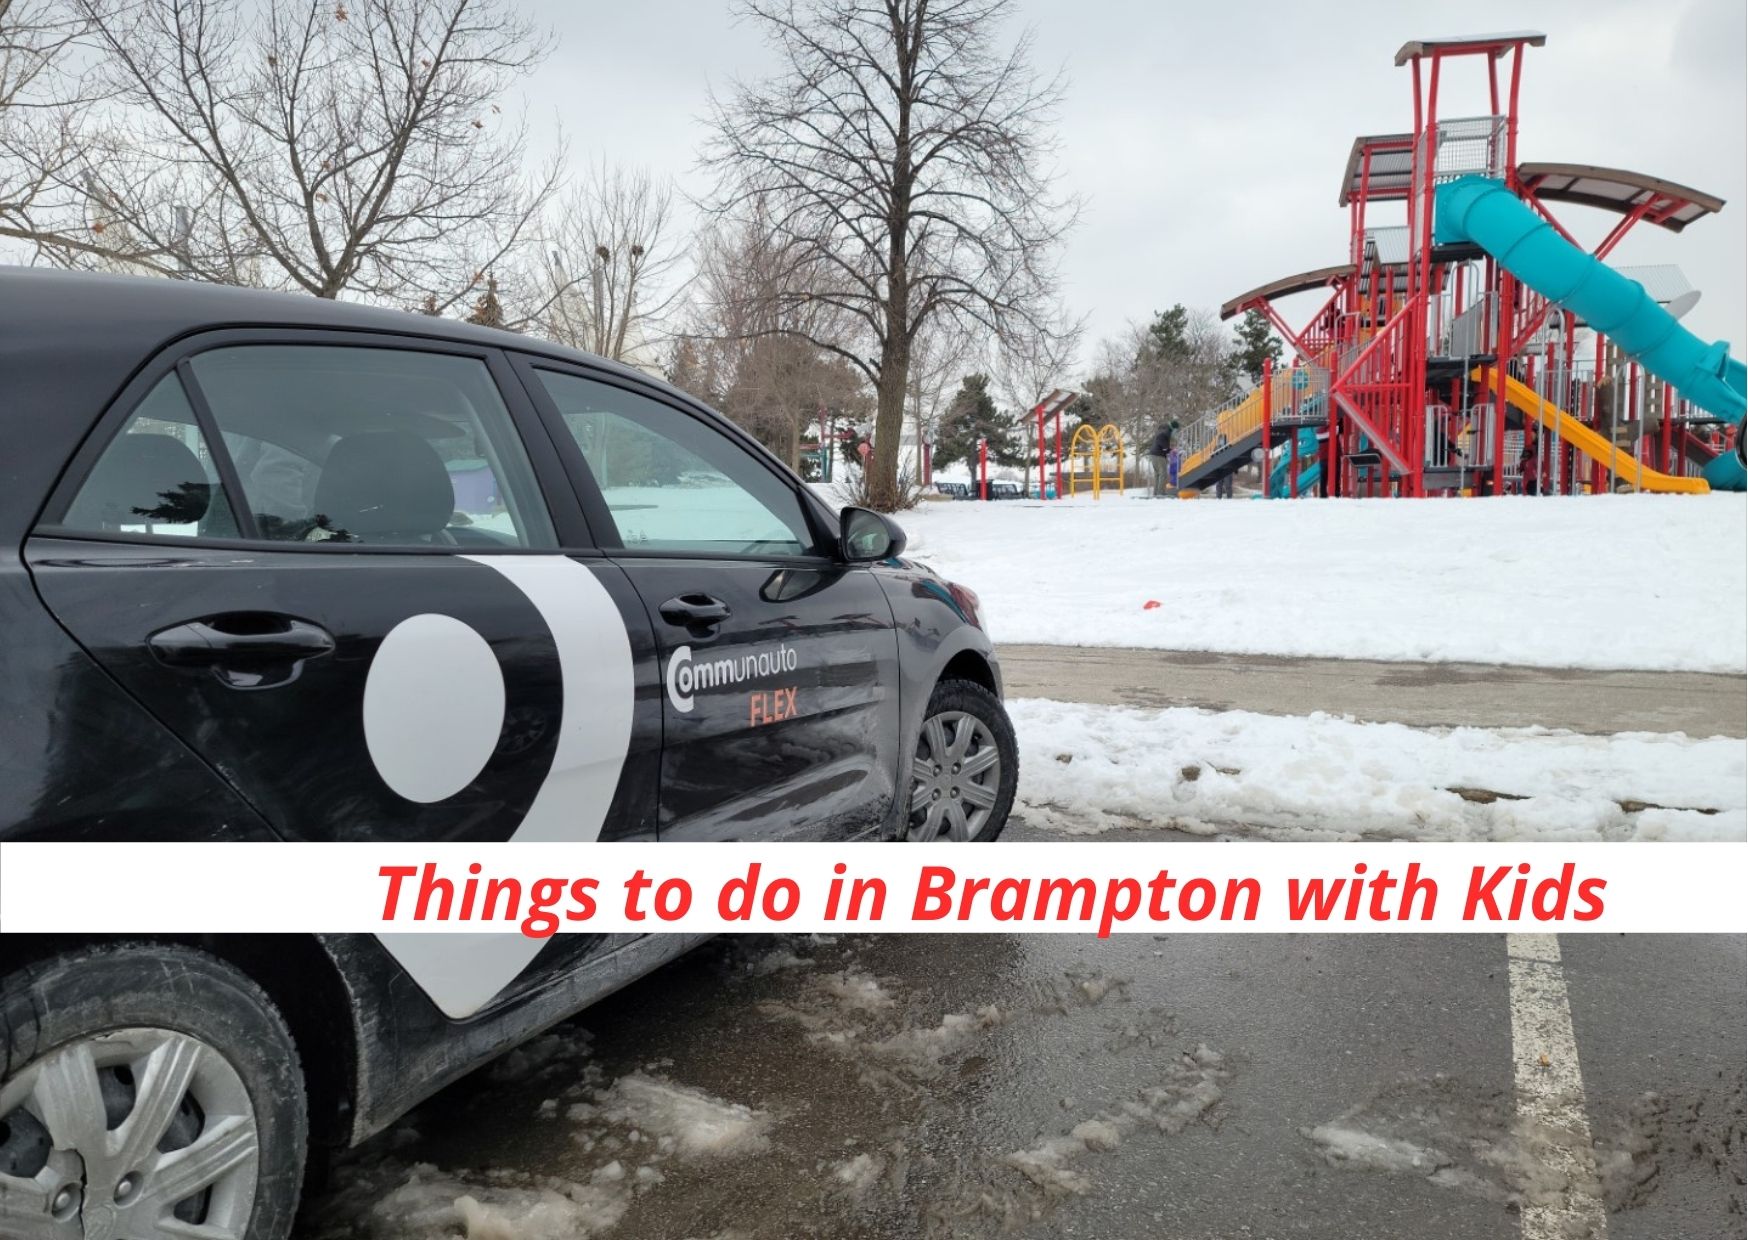 communauto car parked near playground in Brampton